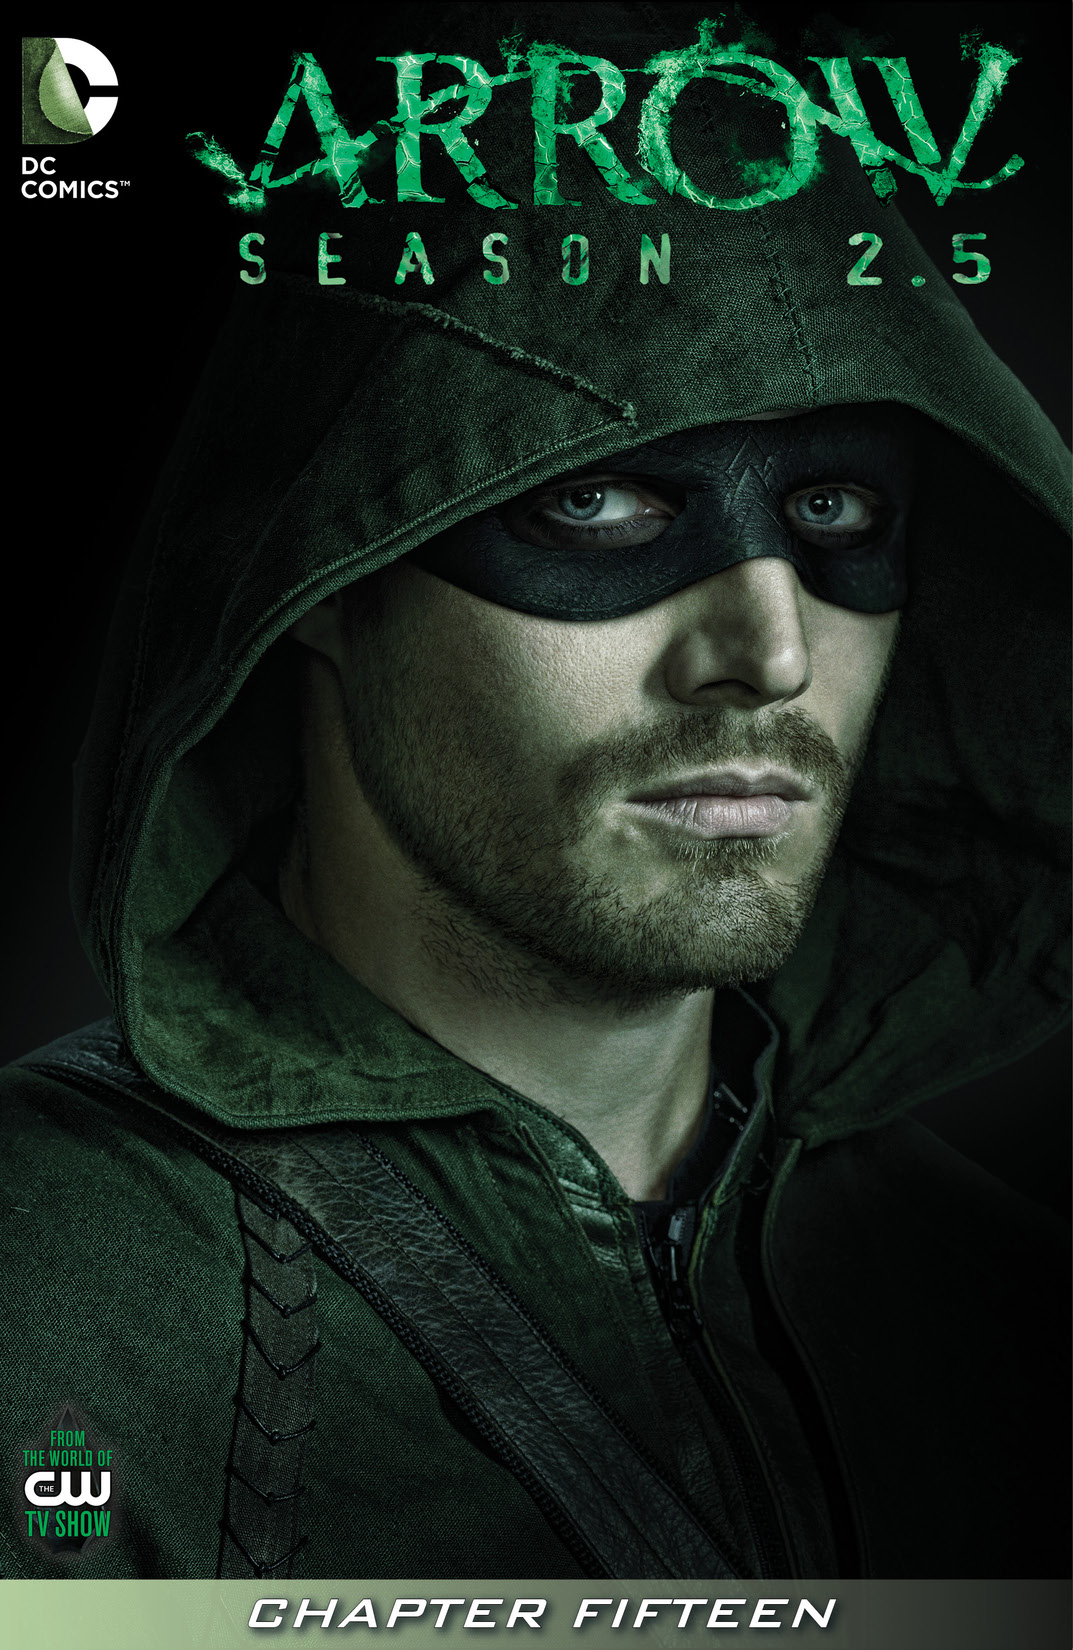 Arrow: Season 2.5 #15 preview images